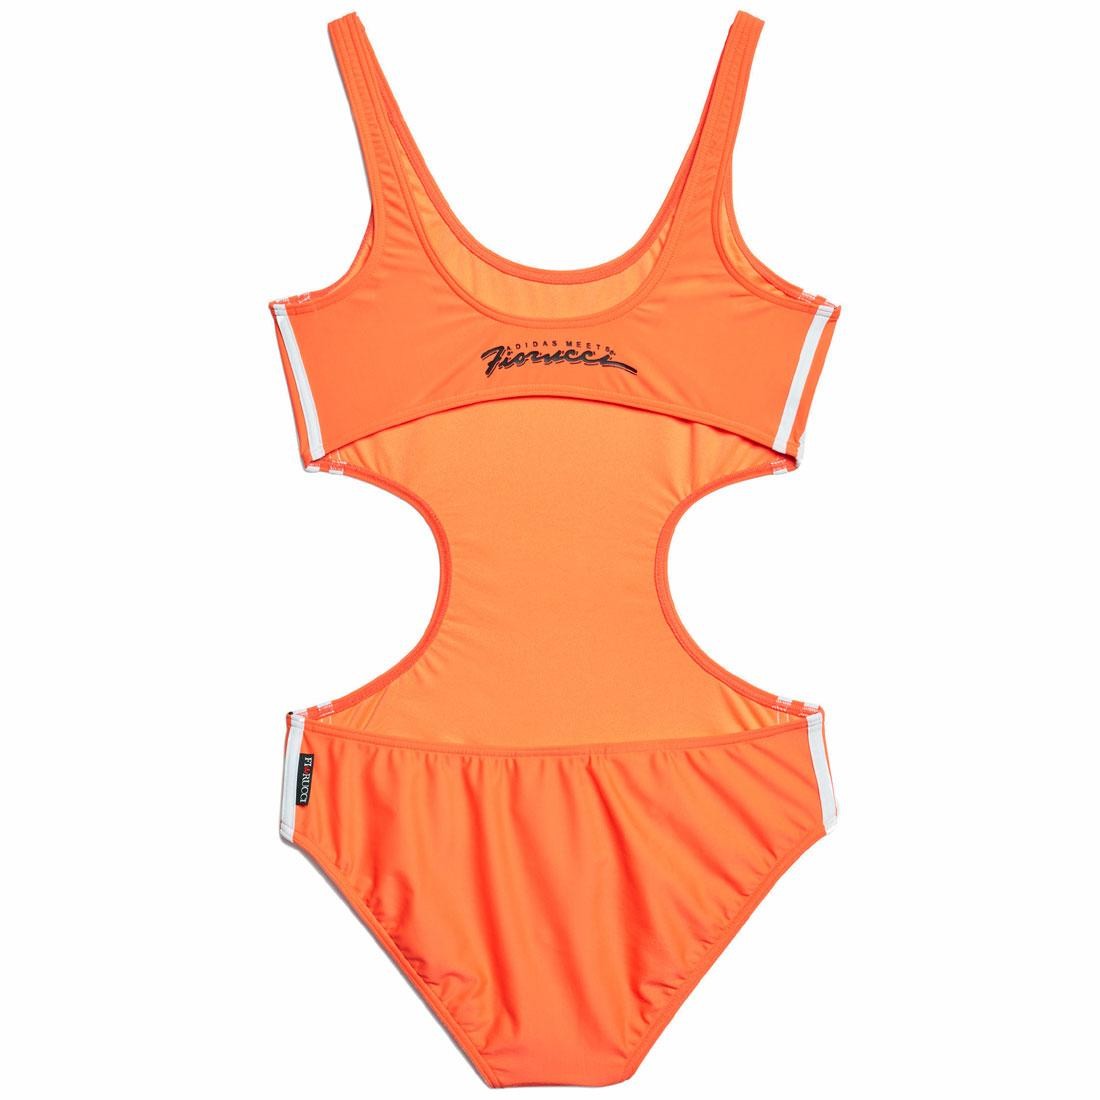 orange adidas swimsuit